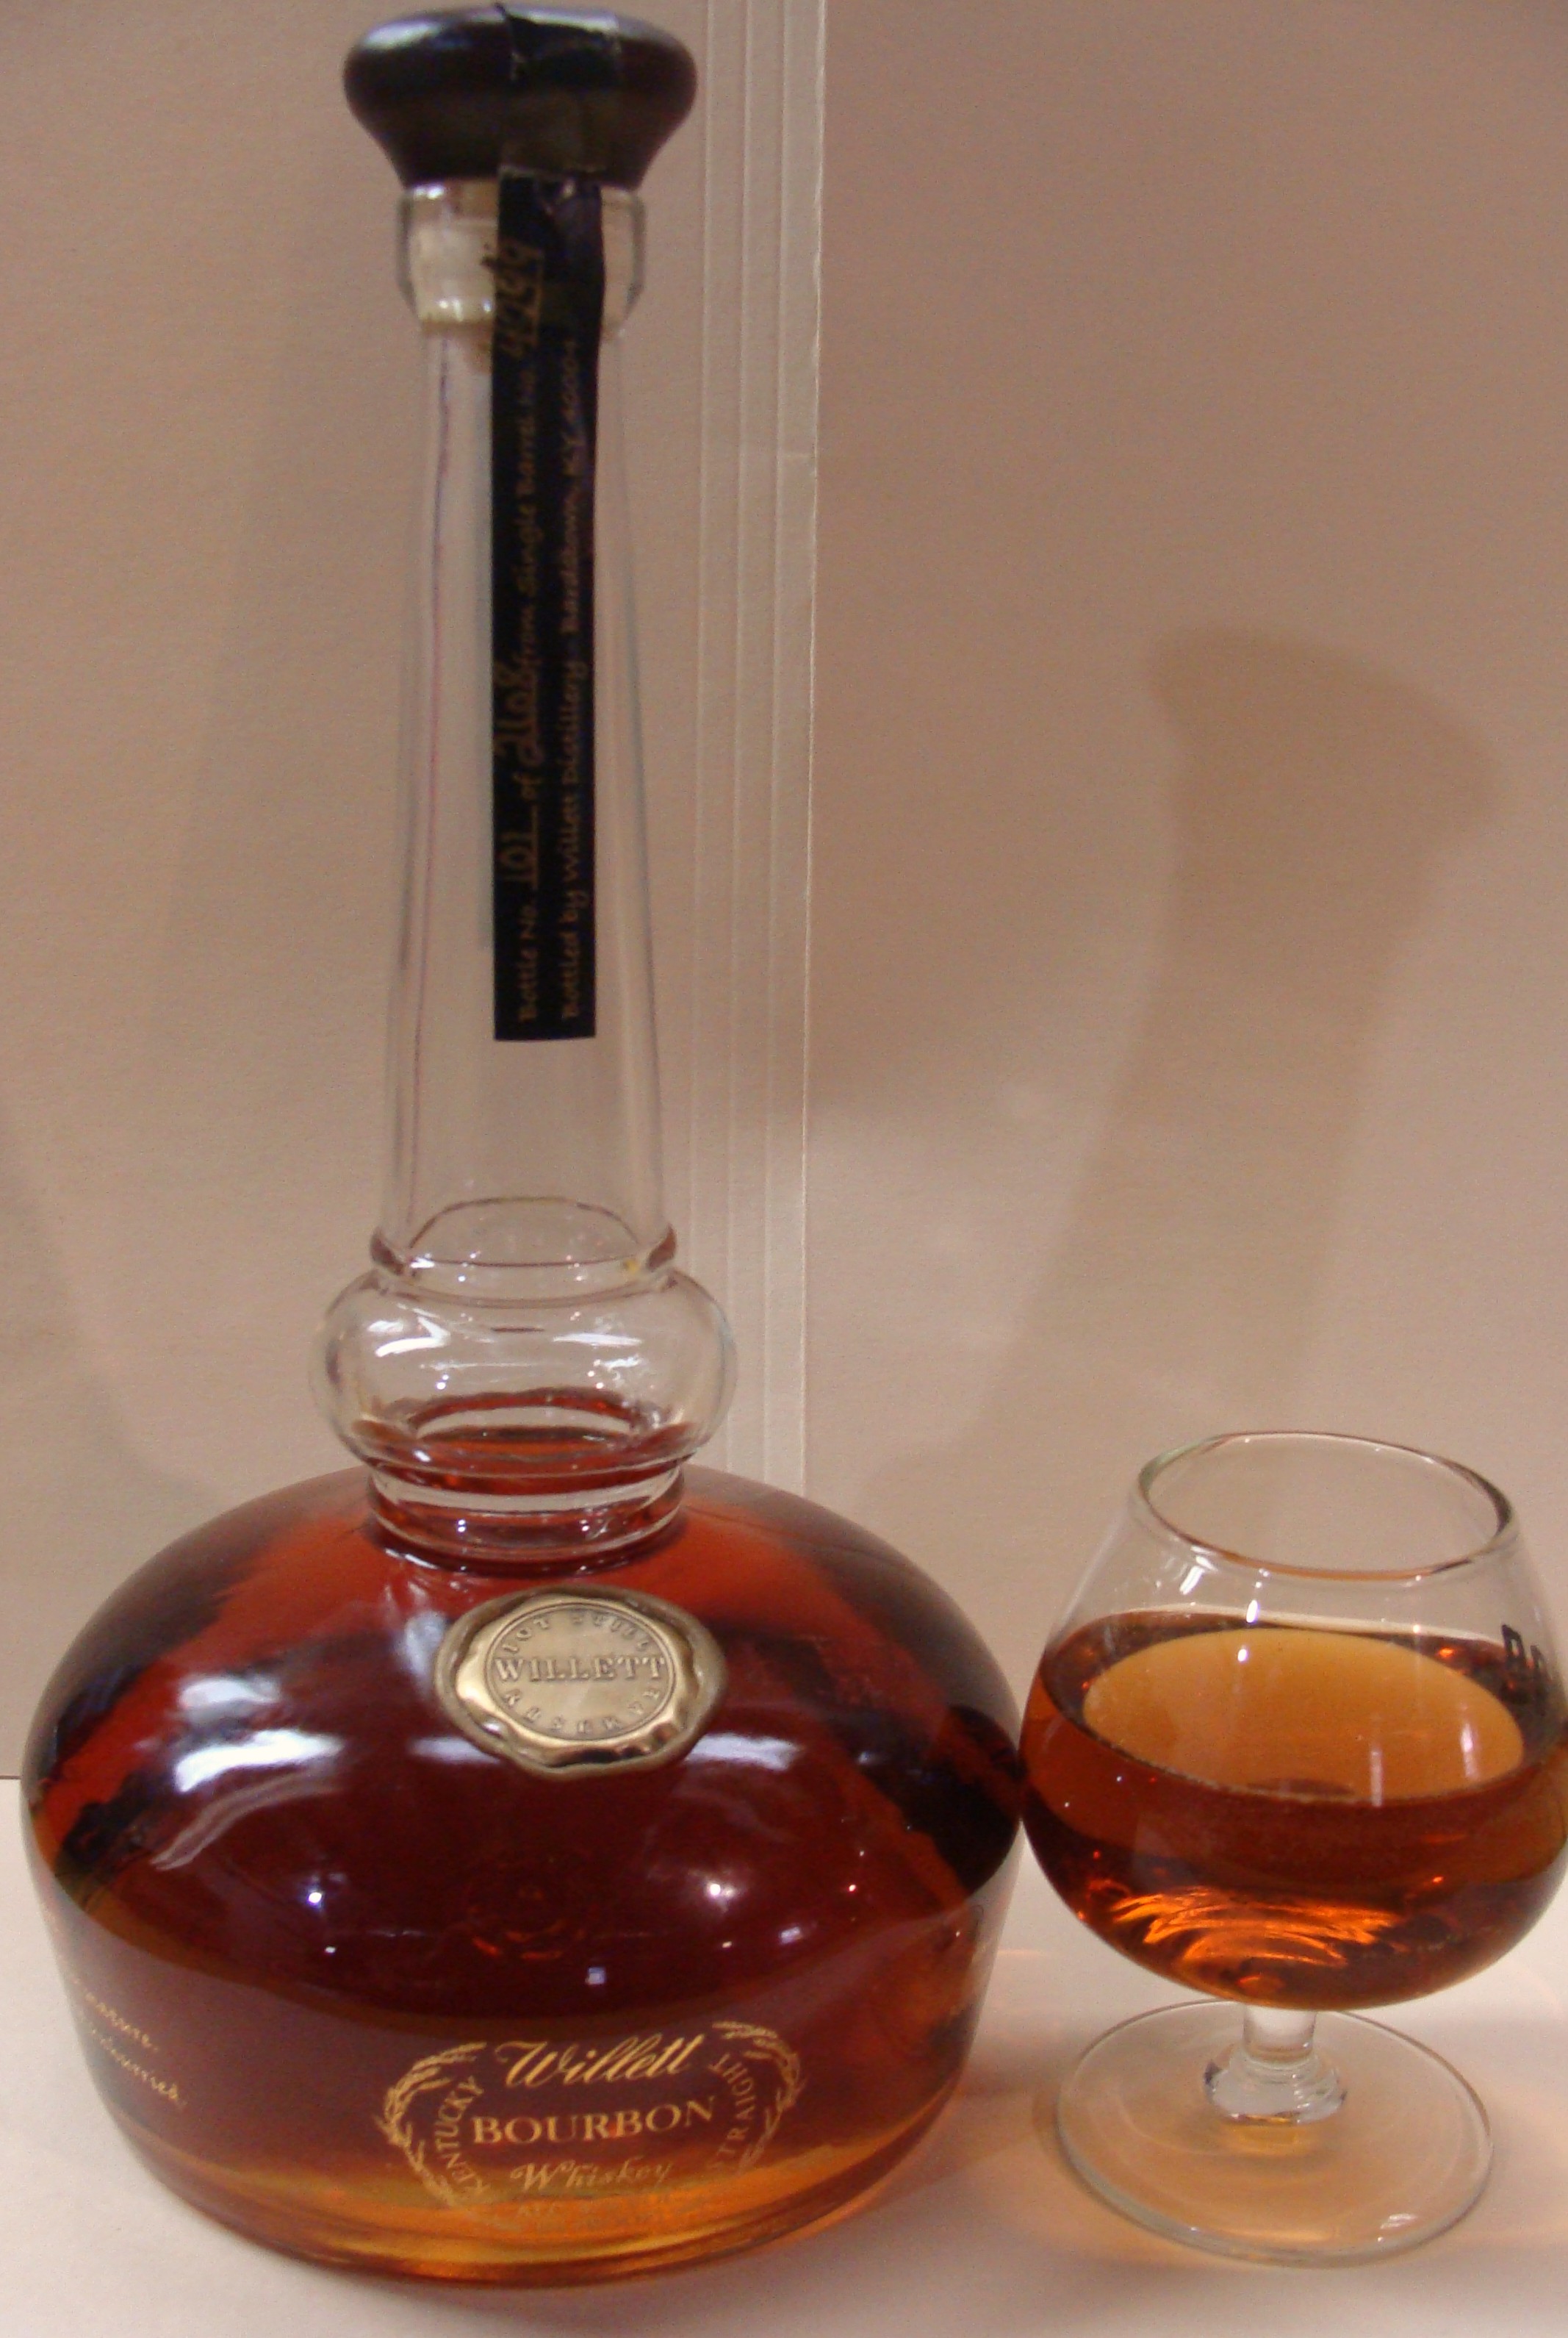 Single pot still whiskey - Wikipedia